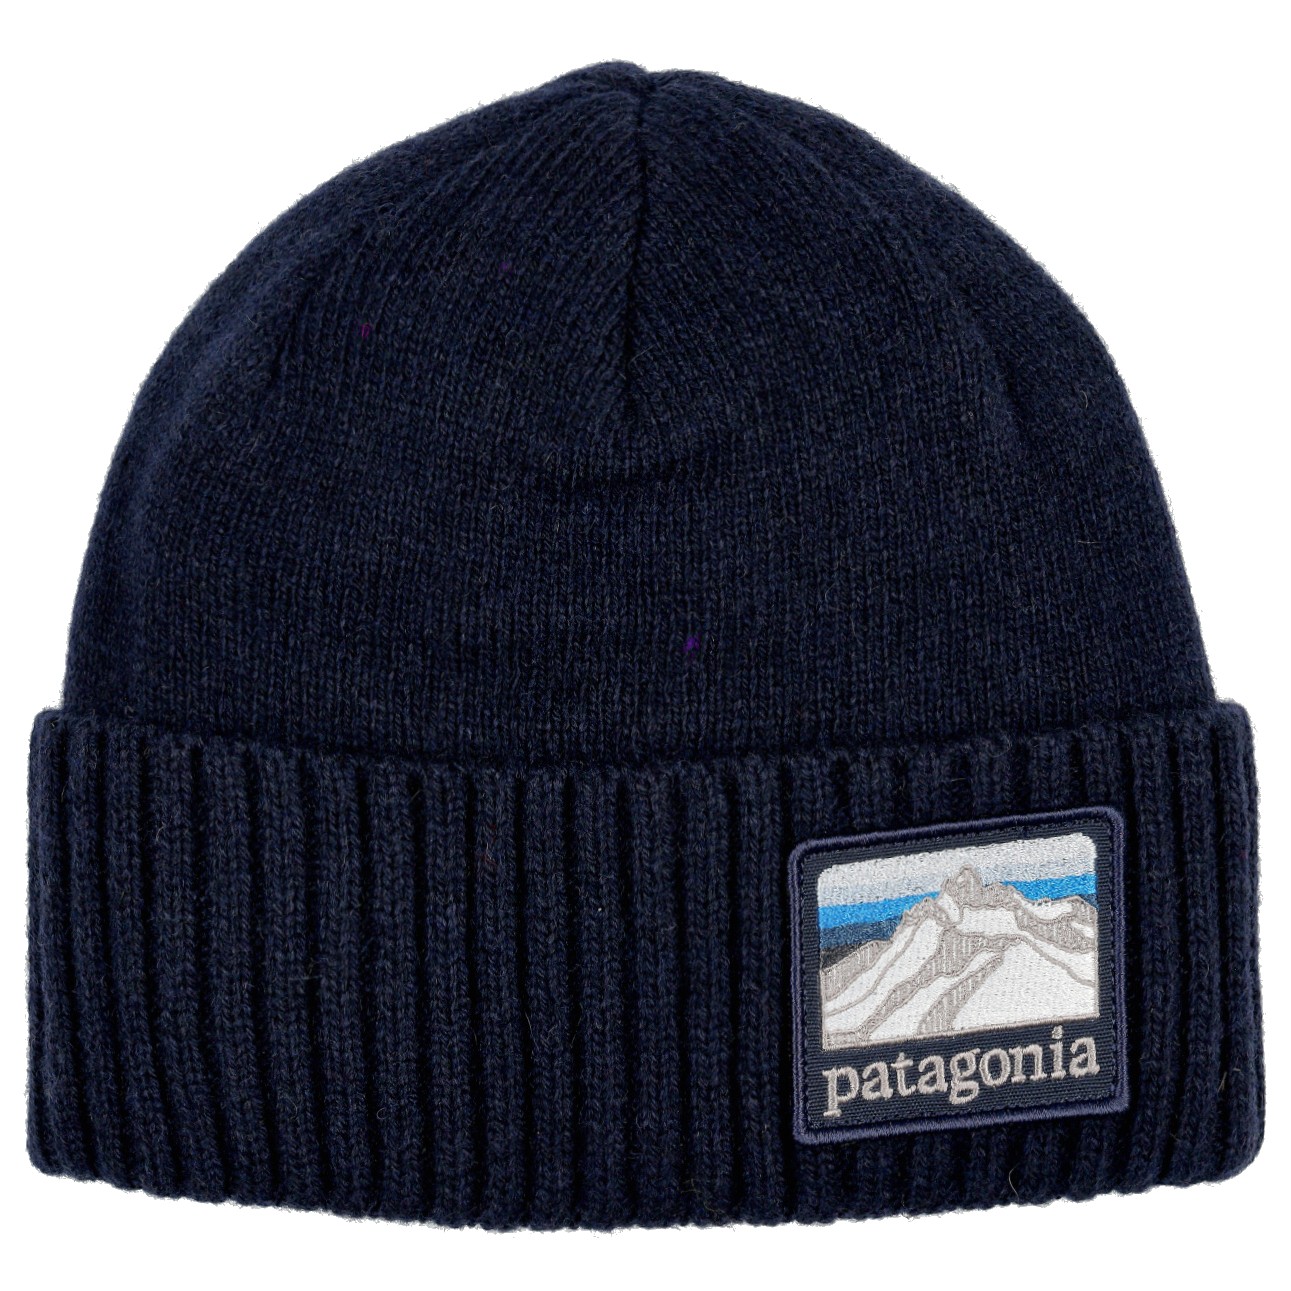 Patagonia Brodeo Beanie Cuffed Beanie Hat